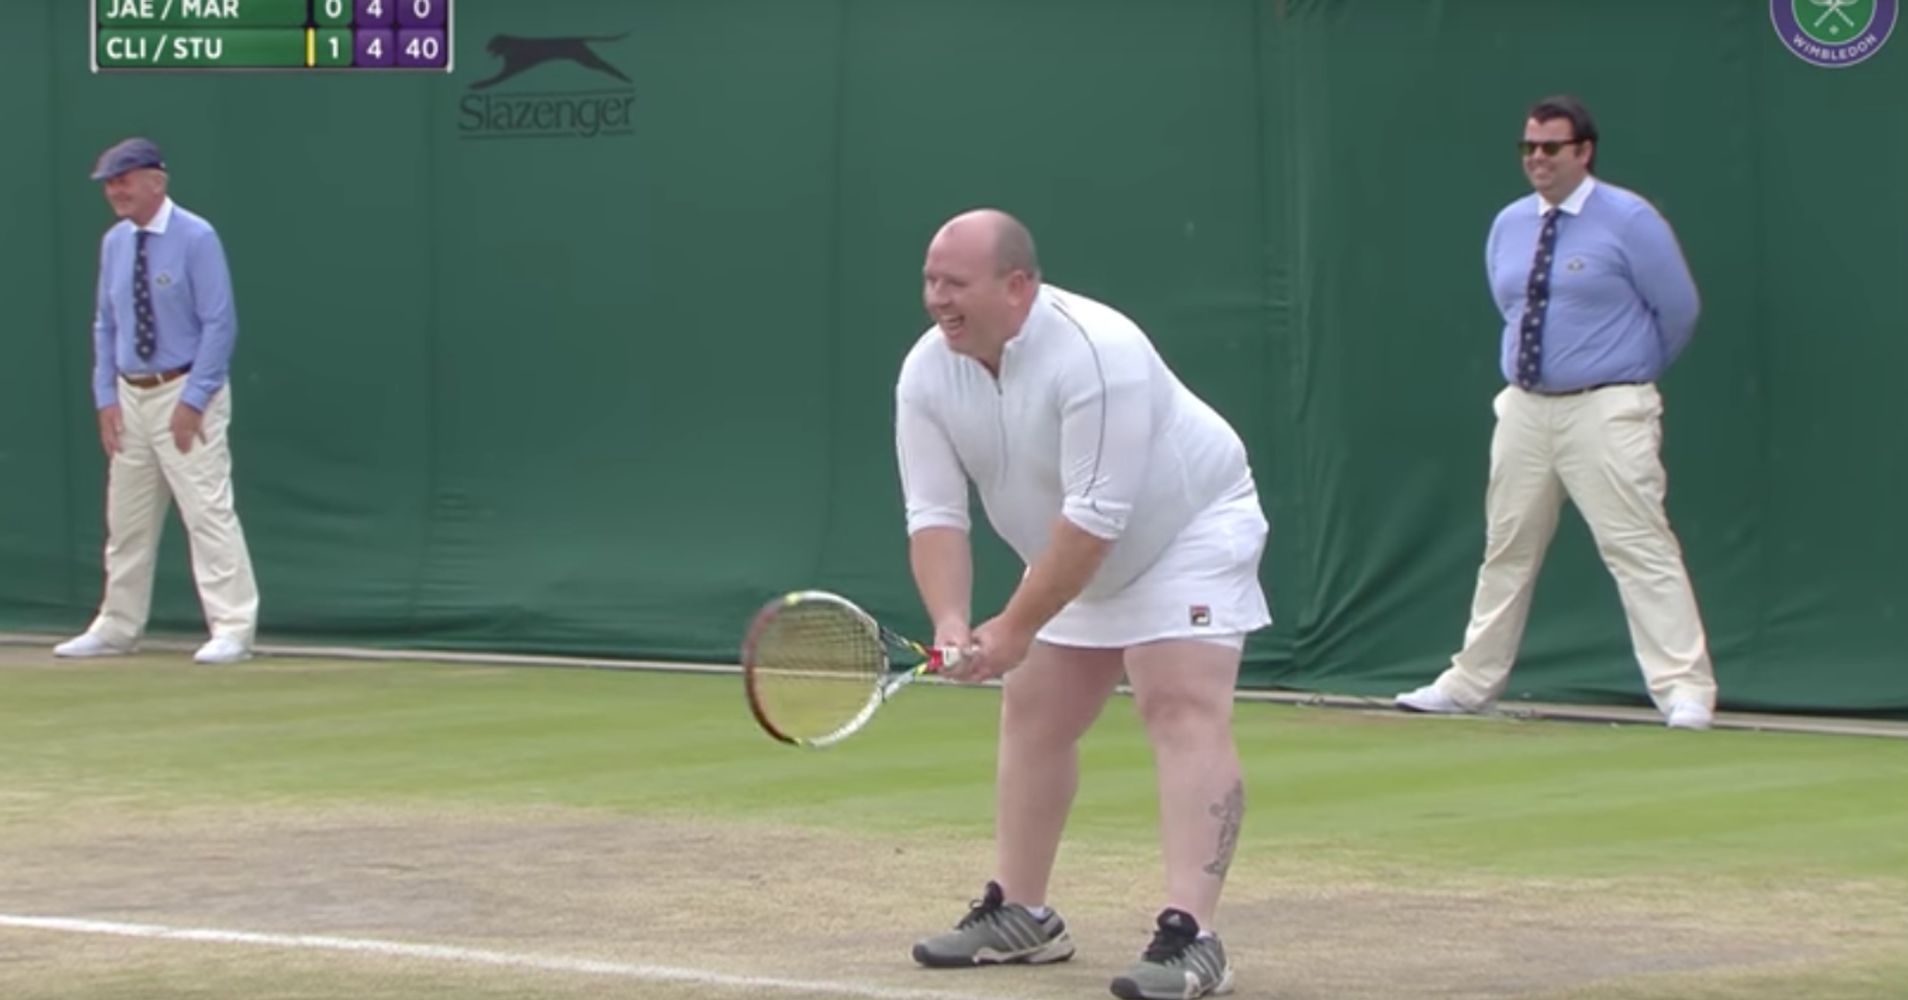 Male Tennis Fan Dons Skirt To Play Wimbledon Women After Shouting Advice